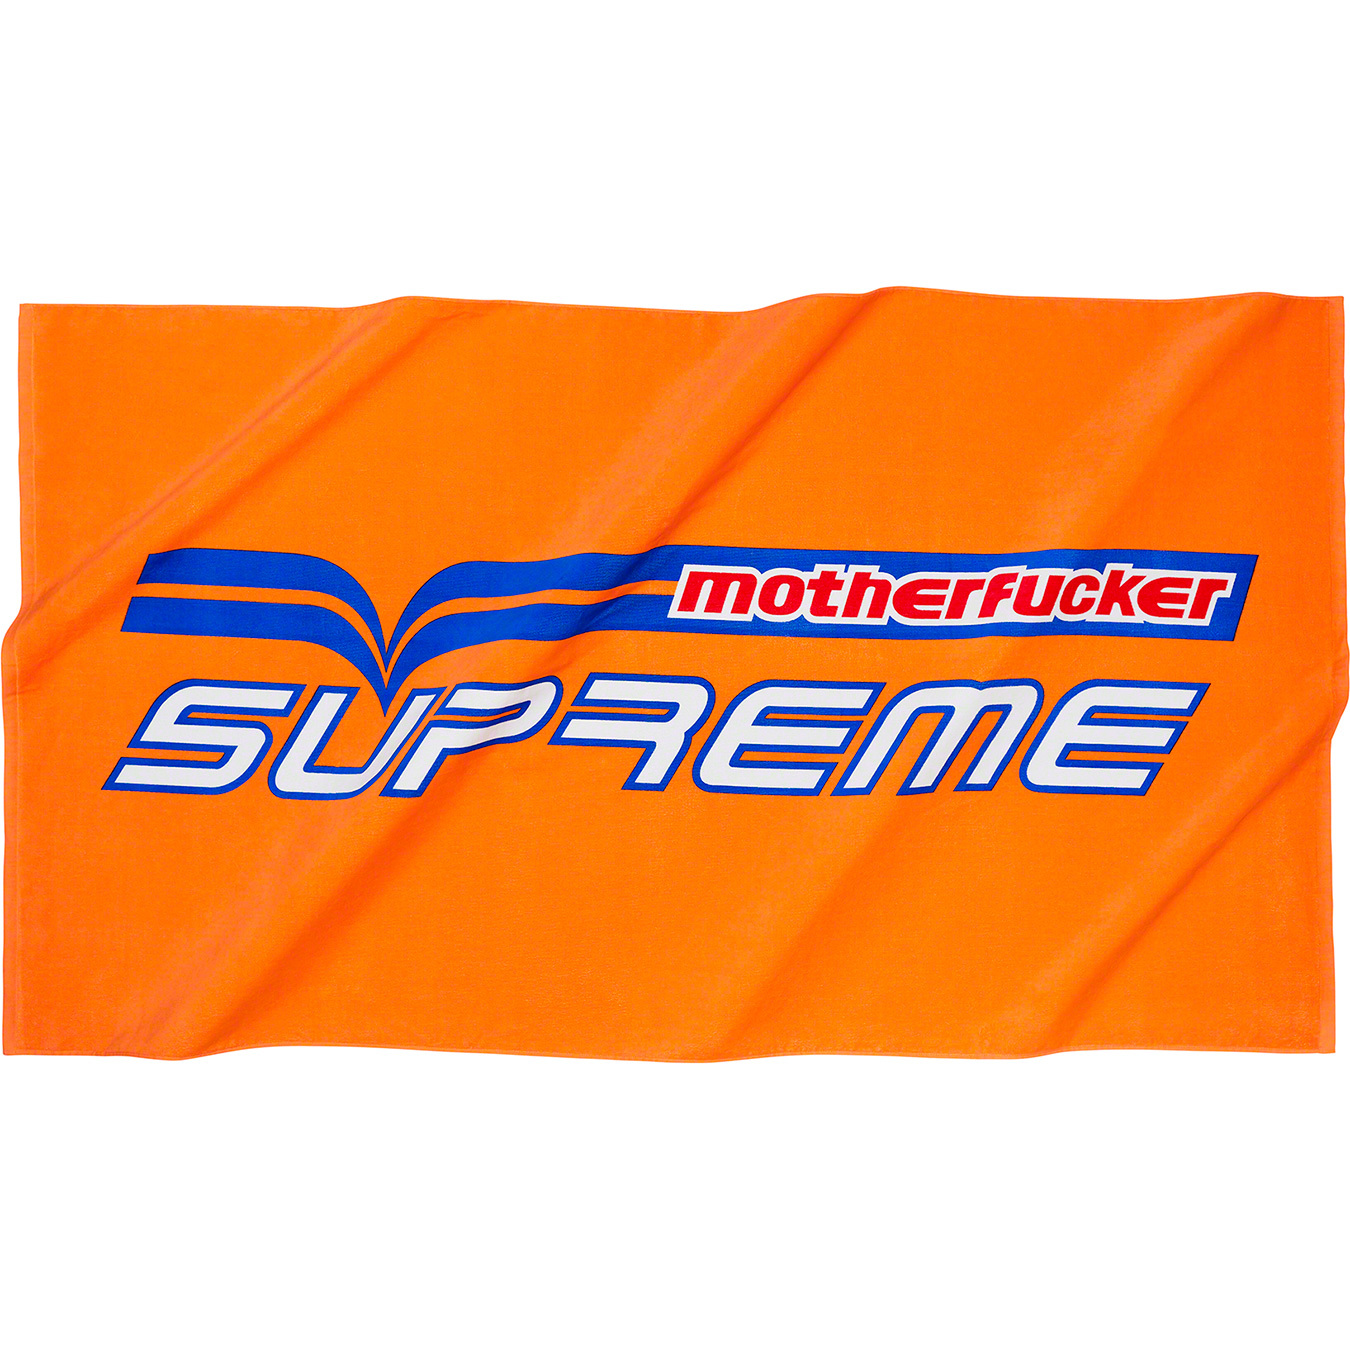 Supreme Motherfucker Towel